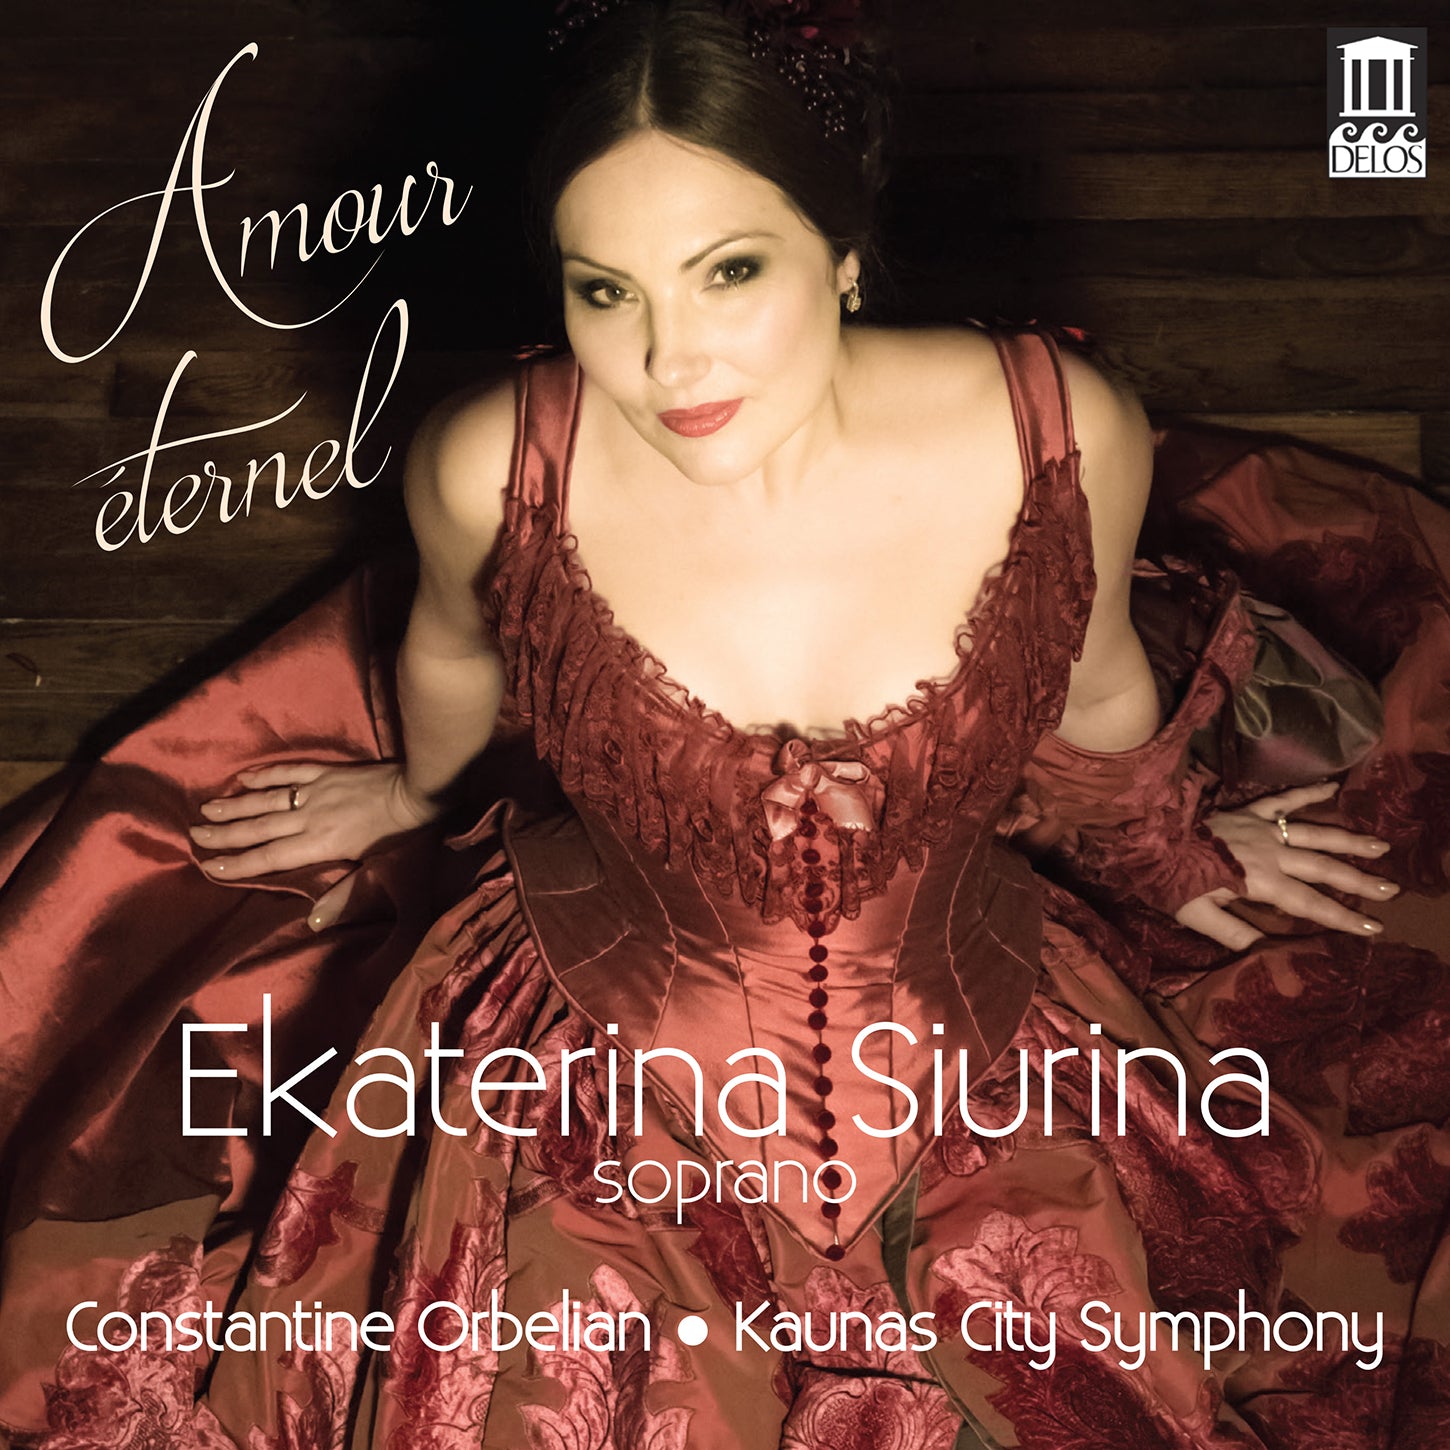 Amour eternel / Ekaterina Siurina, Constantine Orbelian, Kaunas City Symphony